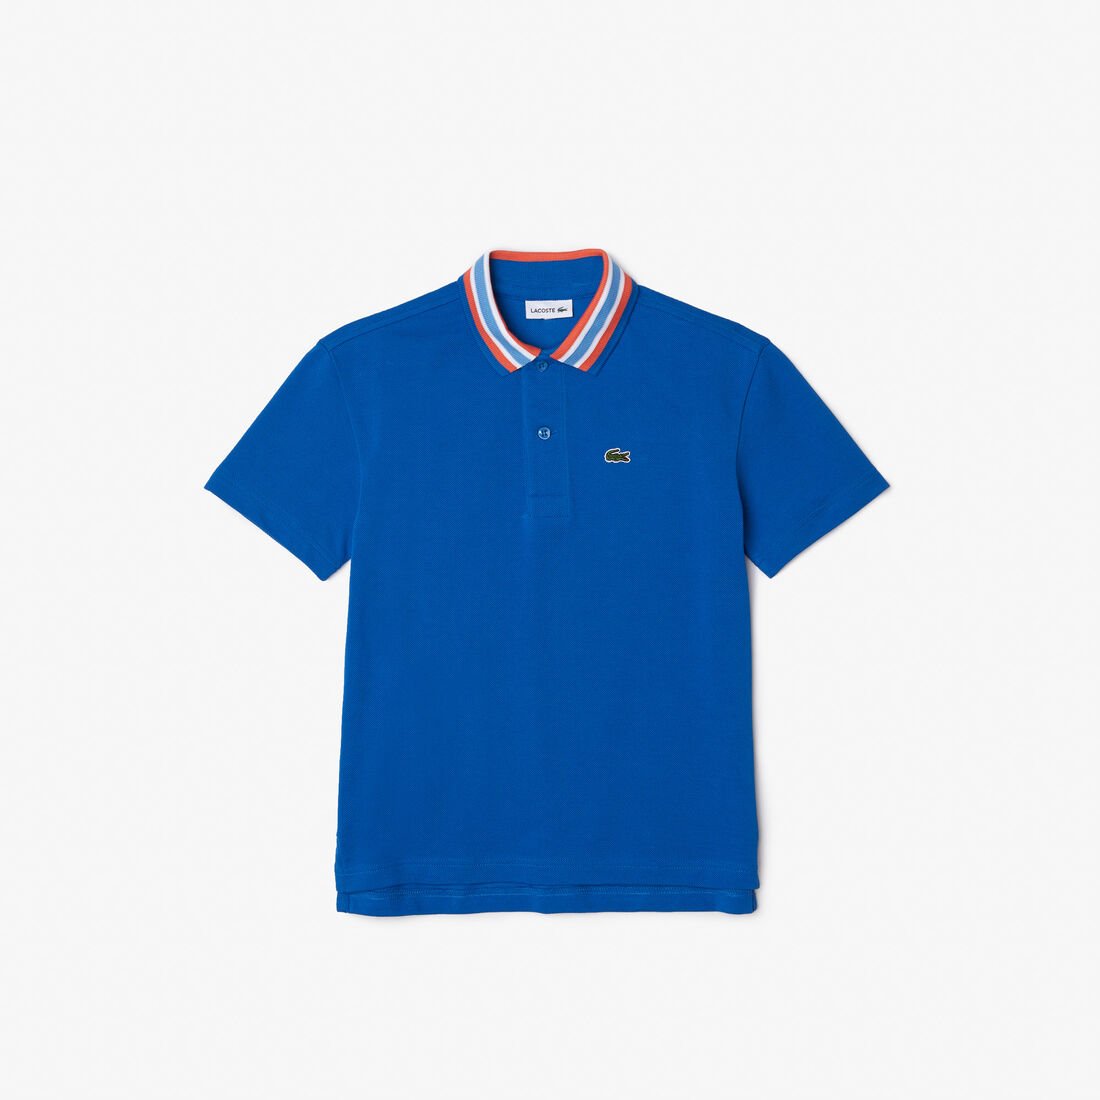 Boys’ Contrast Collar Branded Polo Shirt